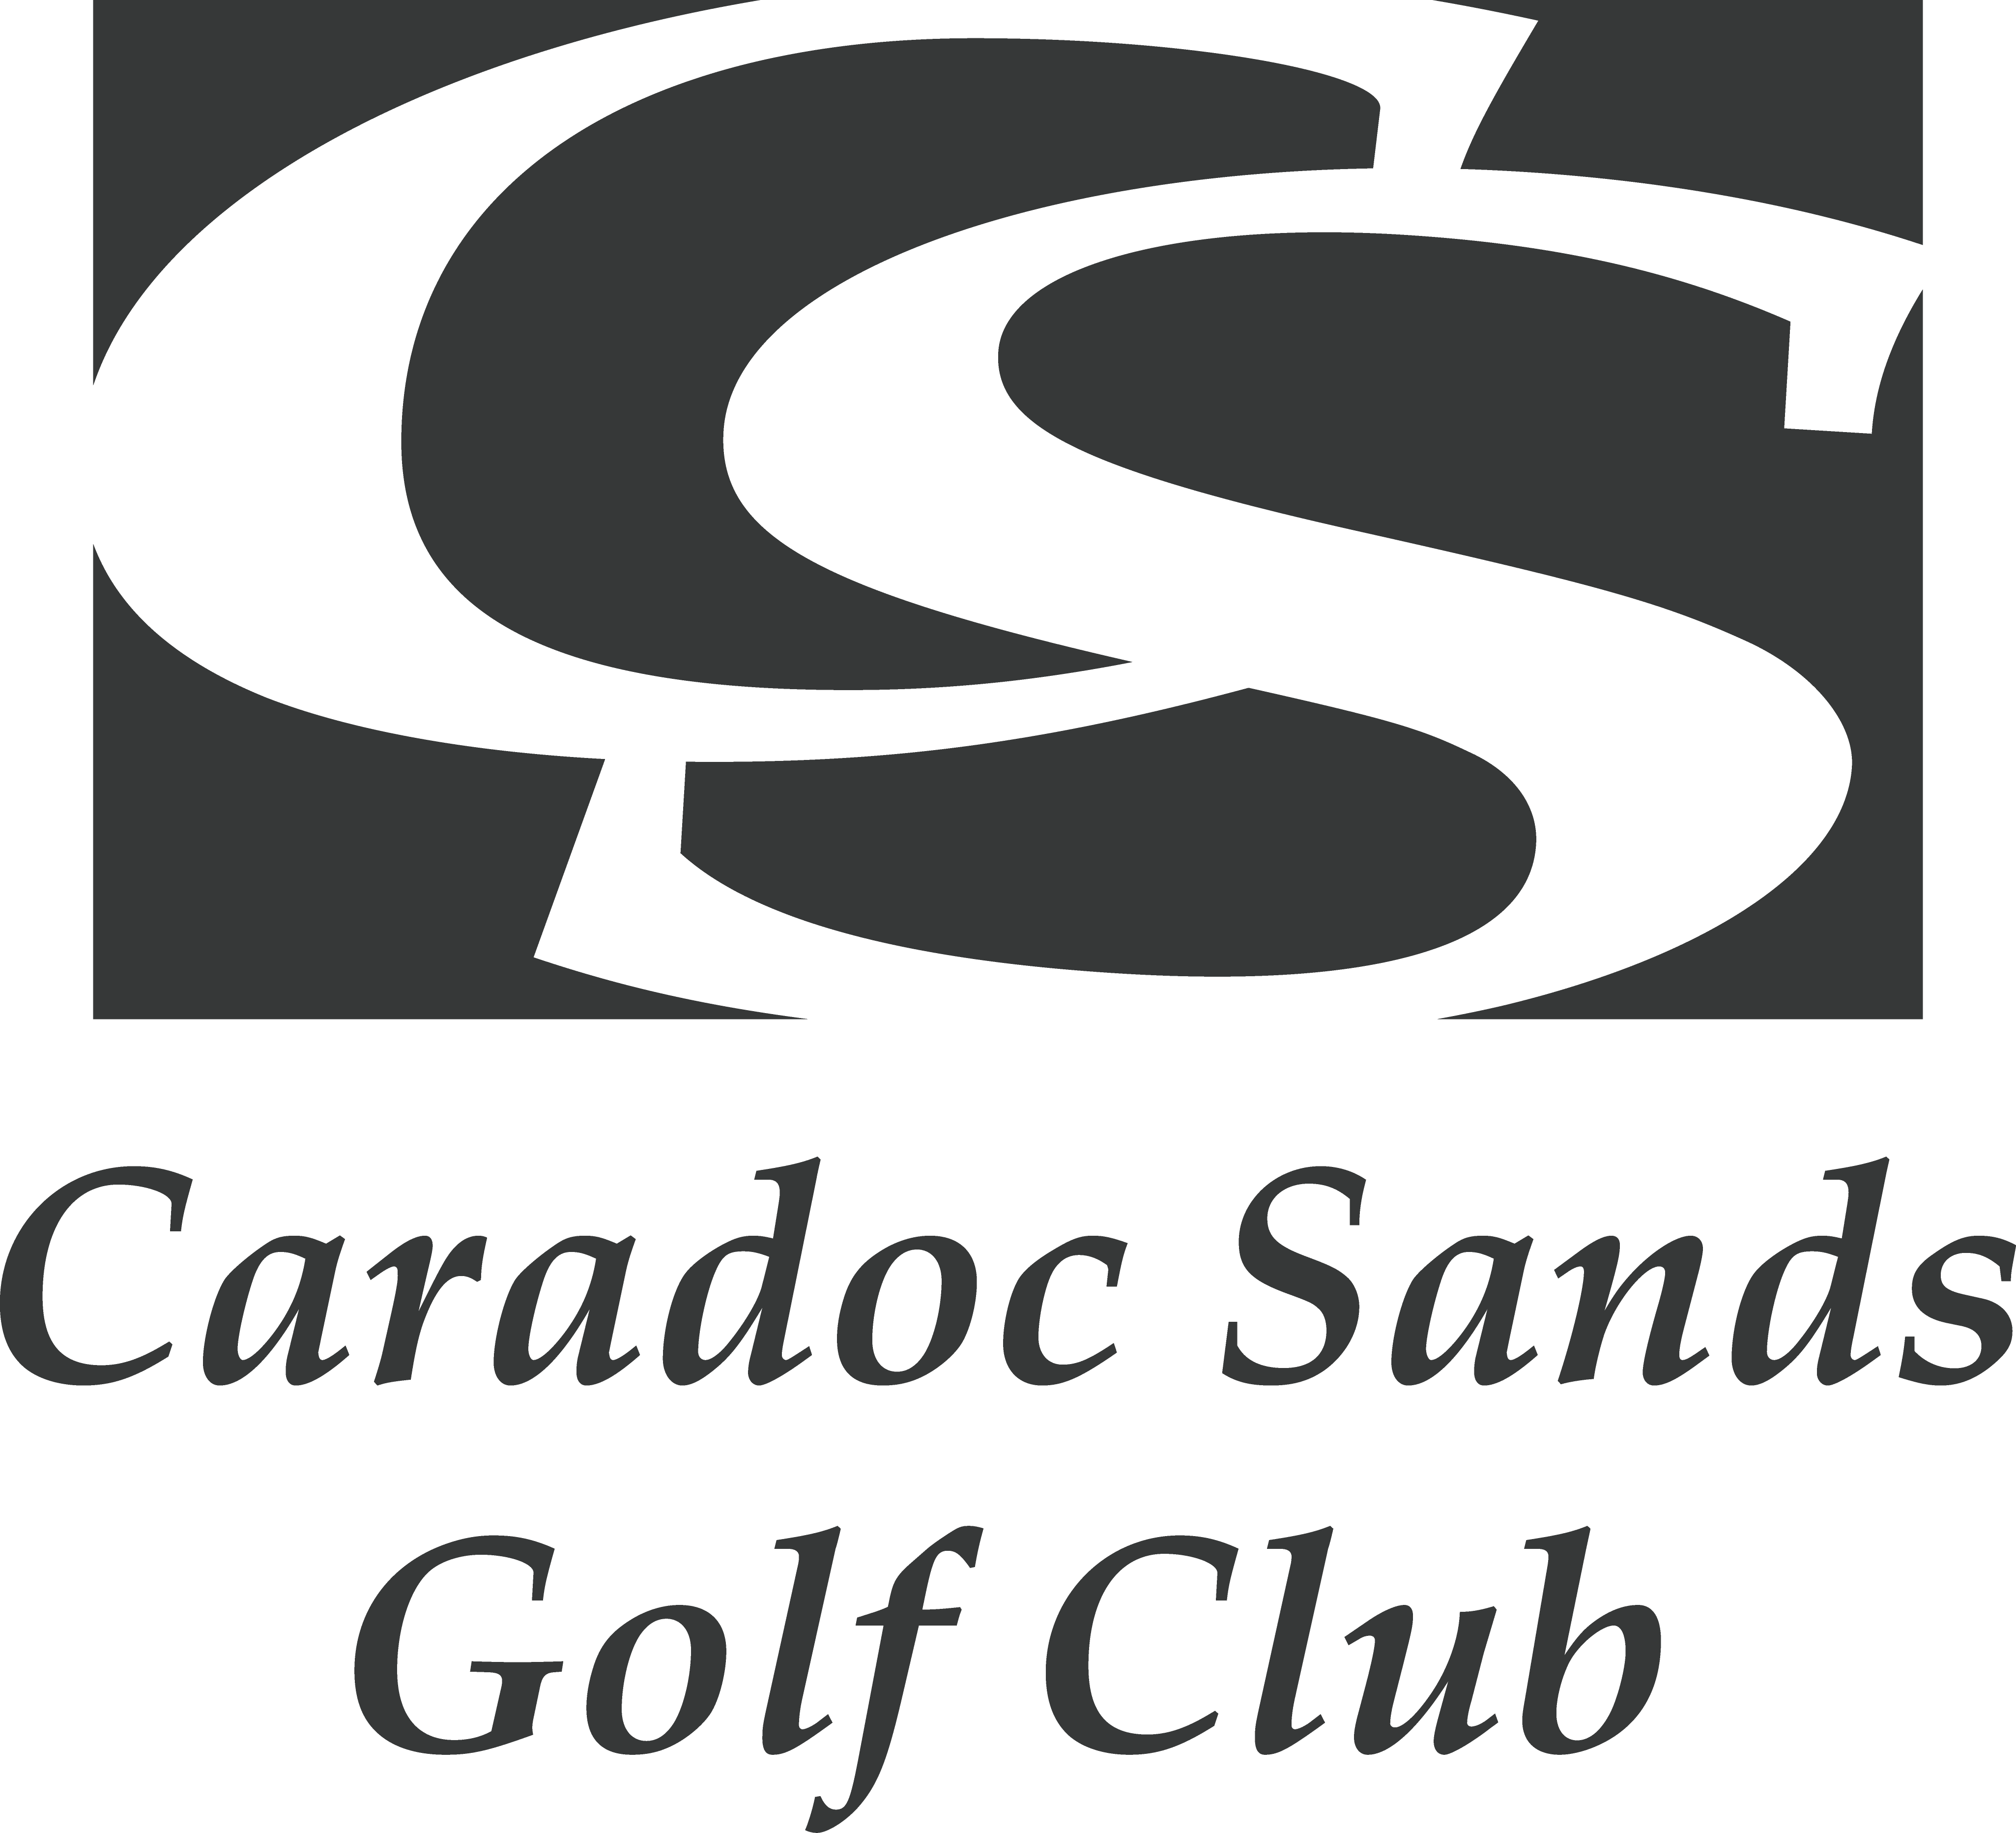 Caradoc Sands 2021